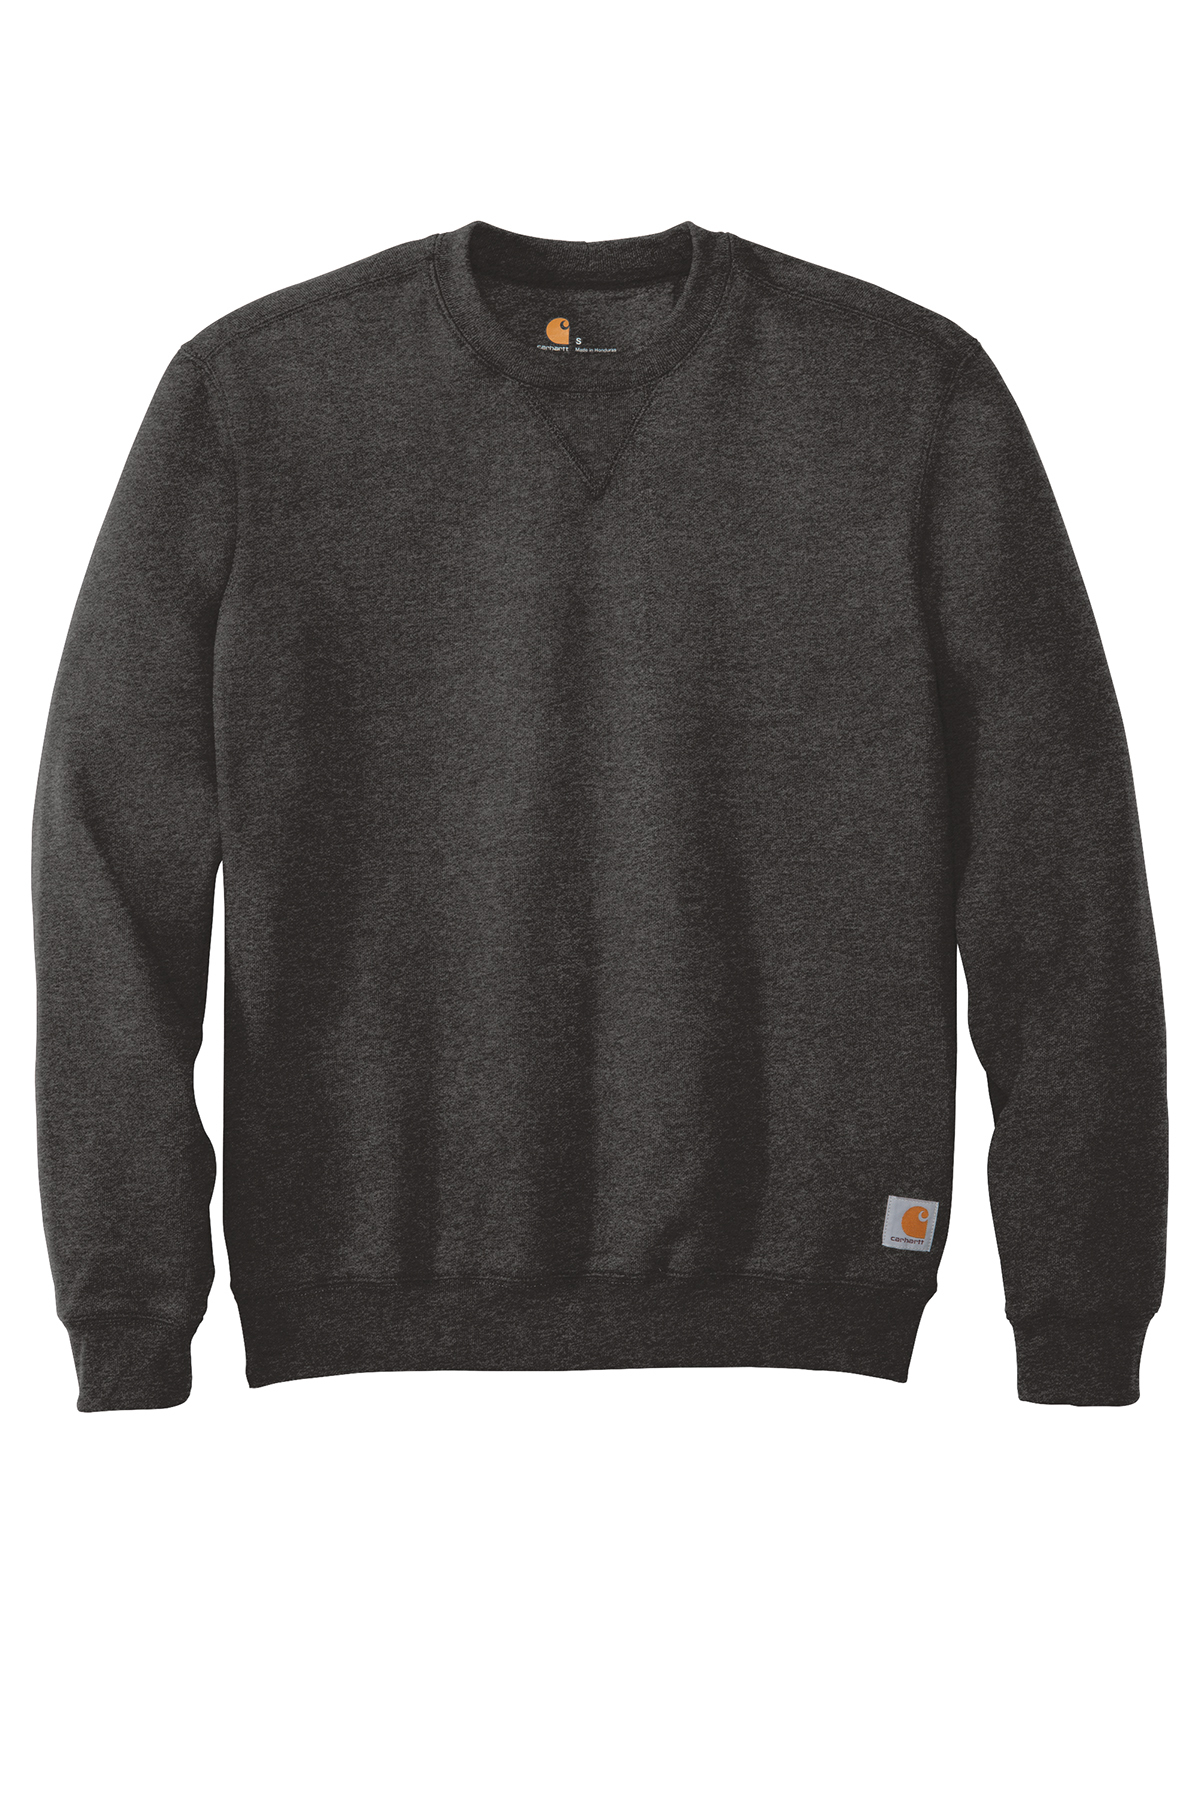 Carhartt ® Midweight Crewneck Sweatshirt | Rocky Mountain Embroidery ...